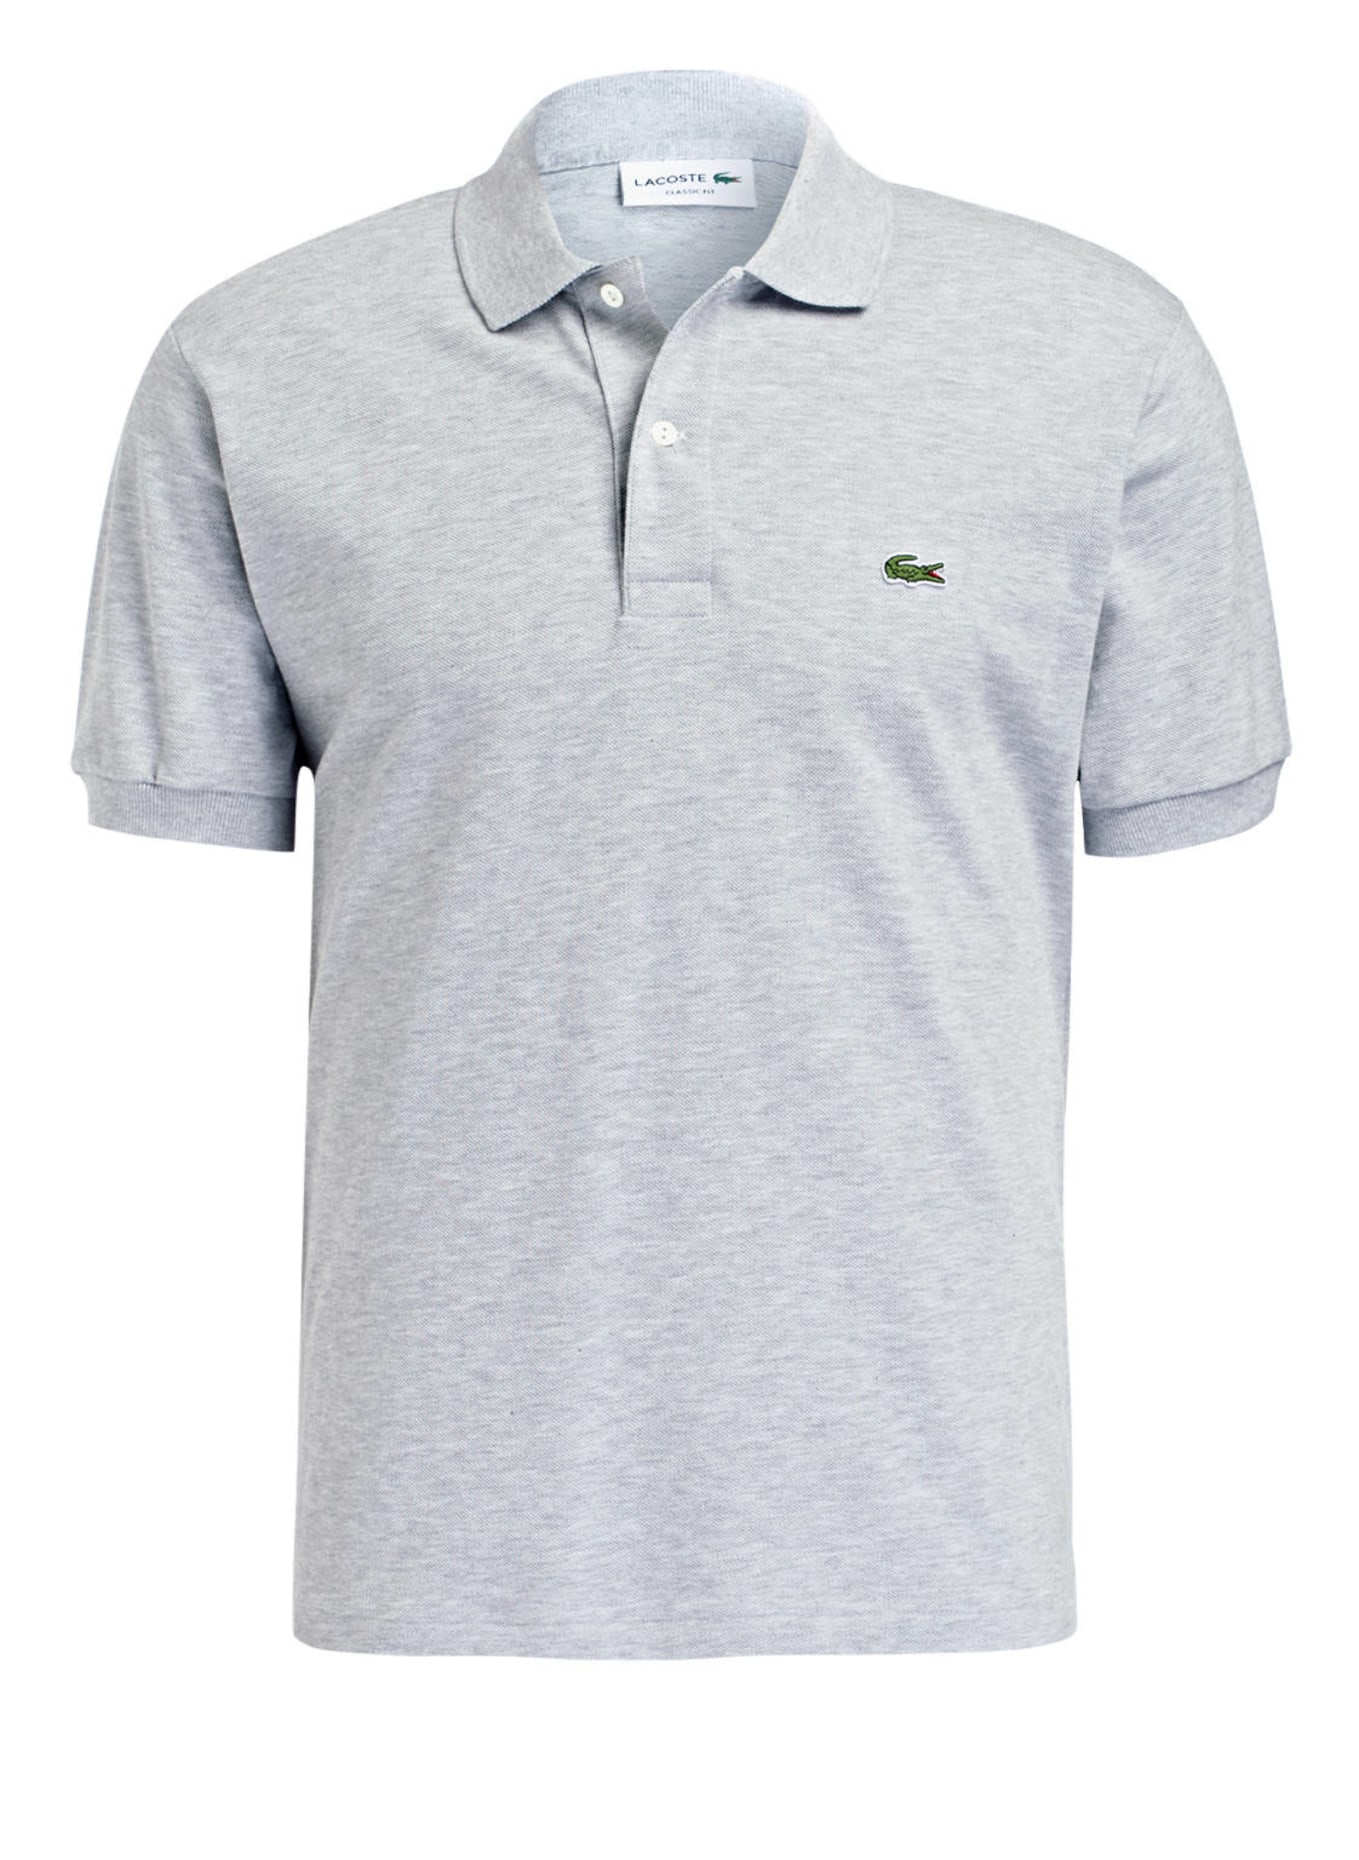 LACOSTE Piqué-Poloshirt Classic Fit, Farbe: HELLGRAU MELIERT (Bild 1)